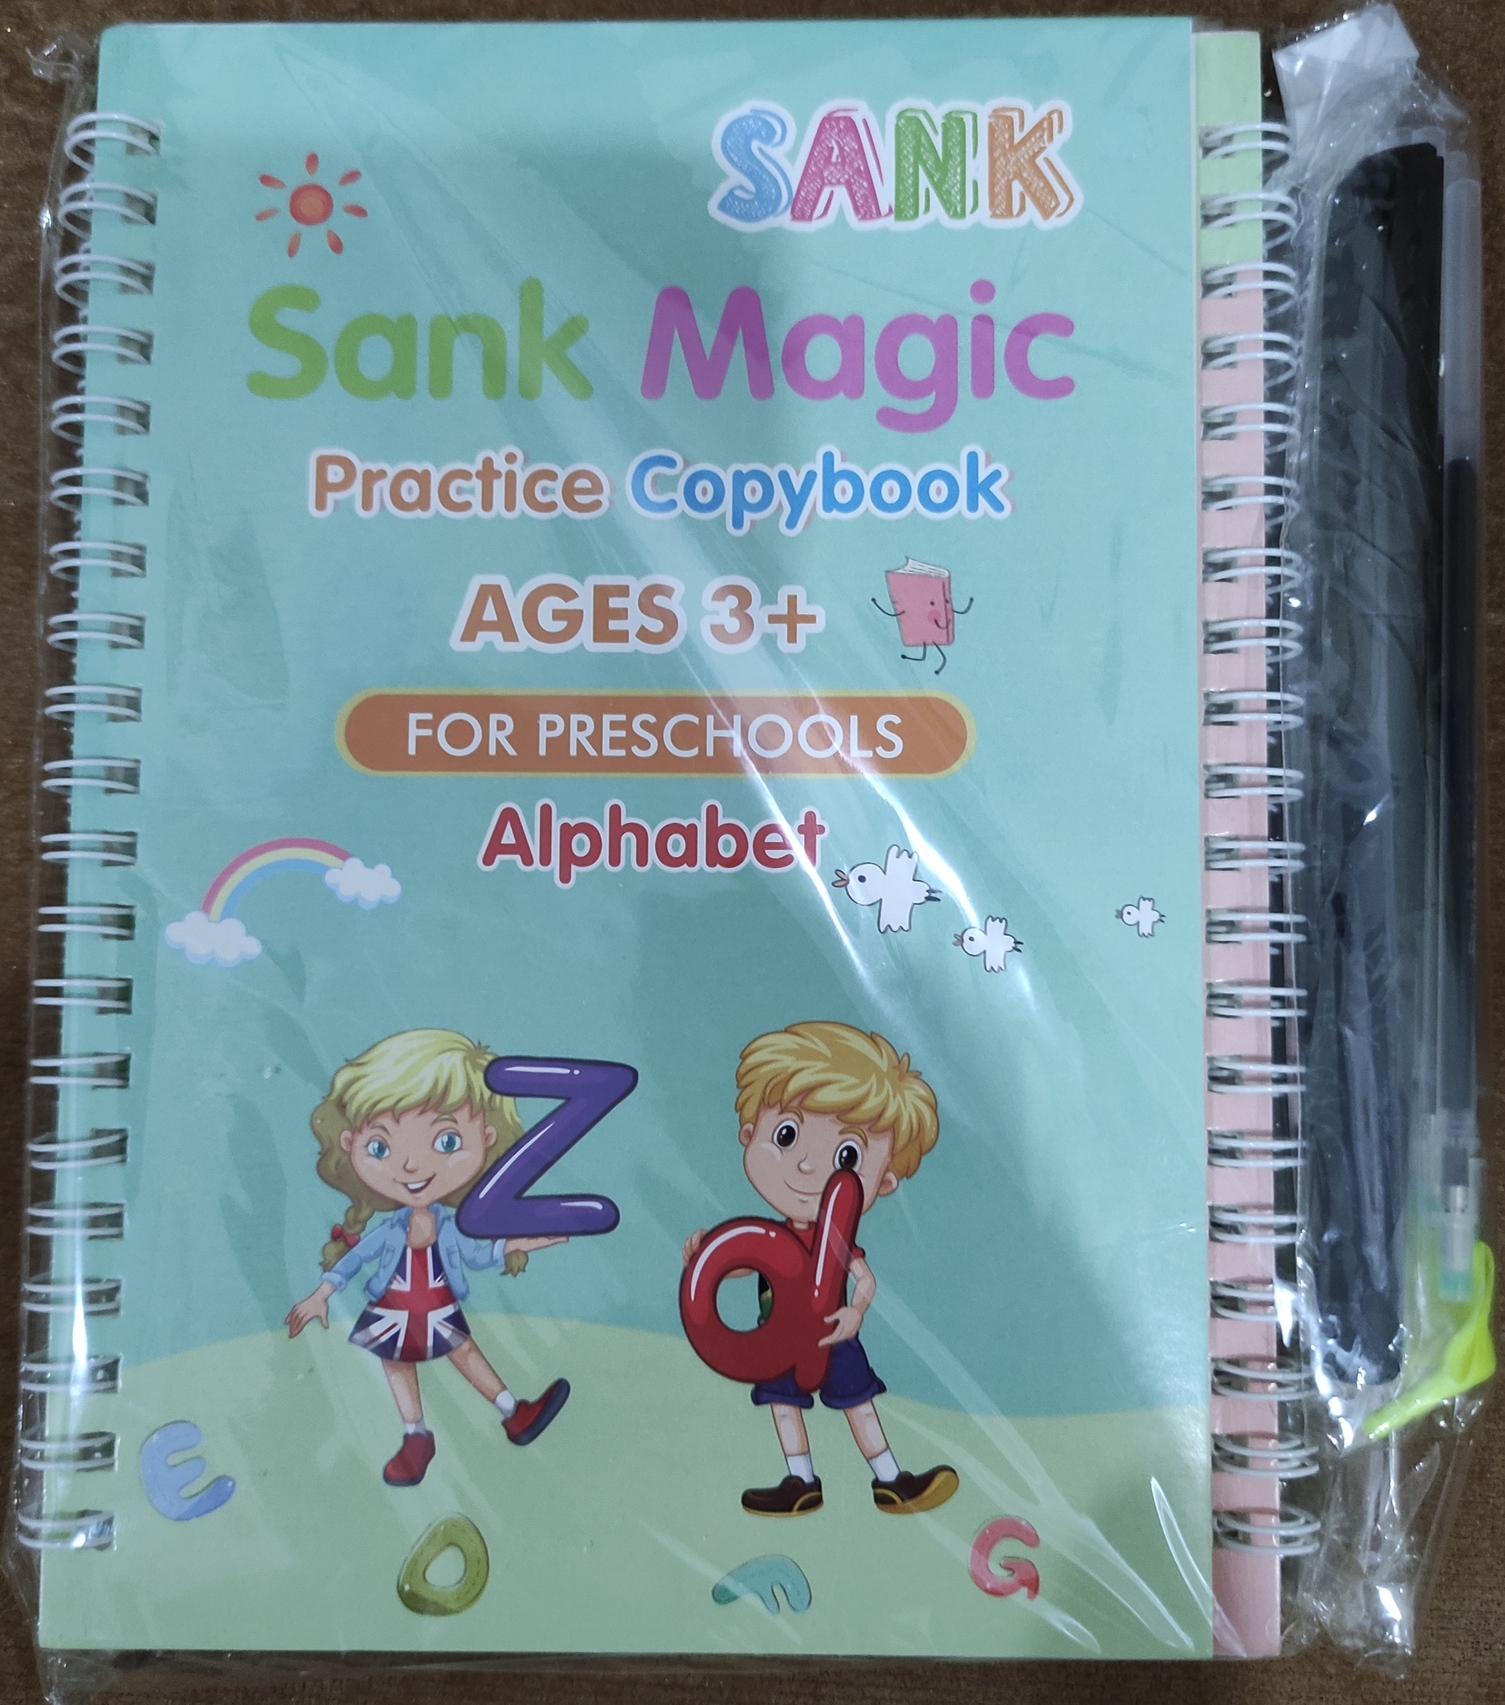 4 PCS Magic Practice Copybook for Kids,Children Reusable